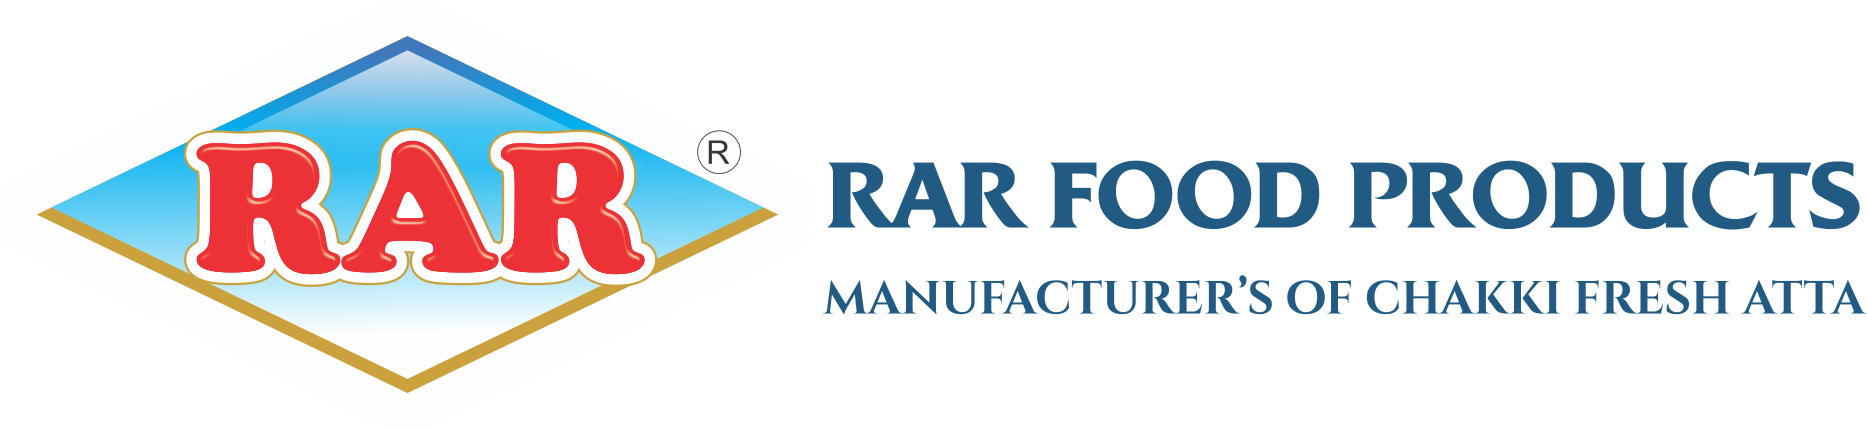 rarfoodproducts.com